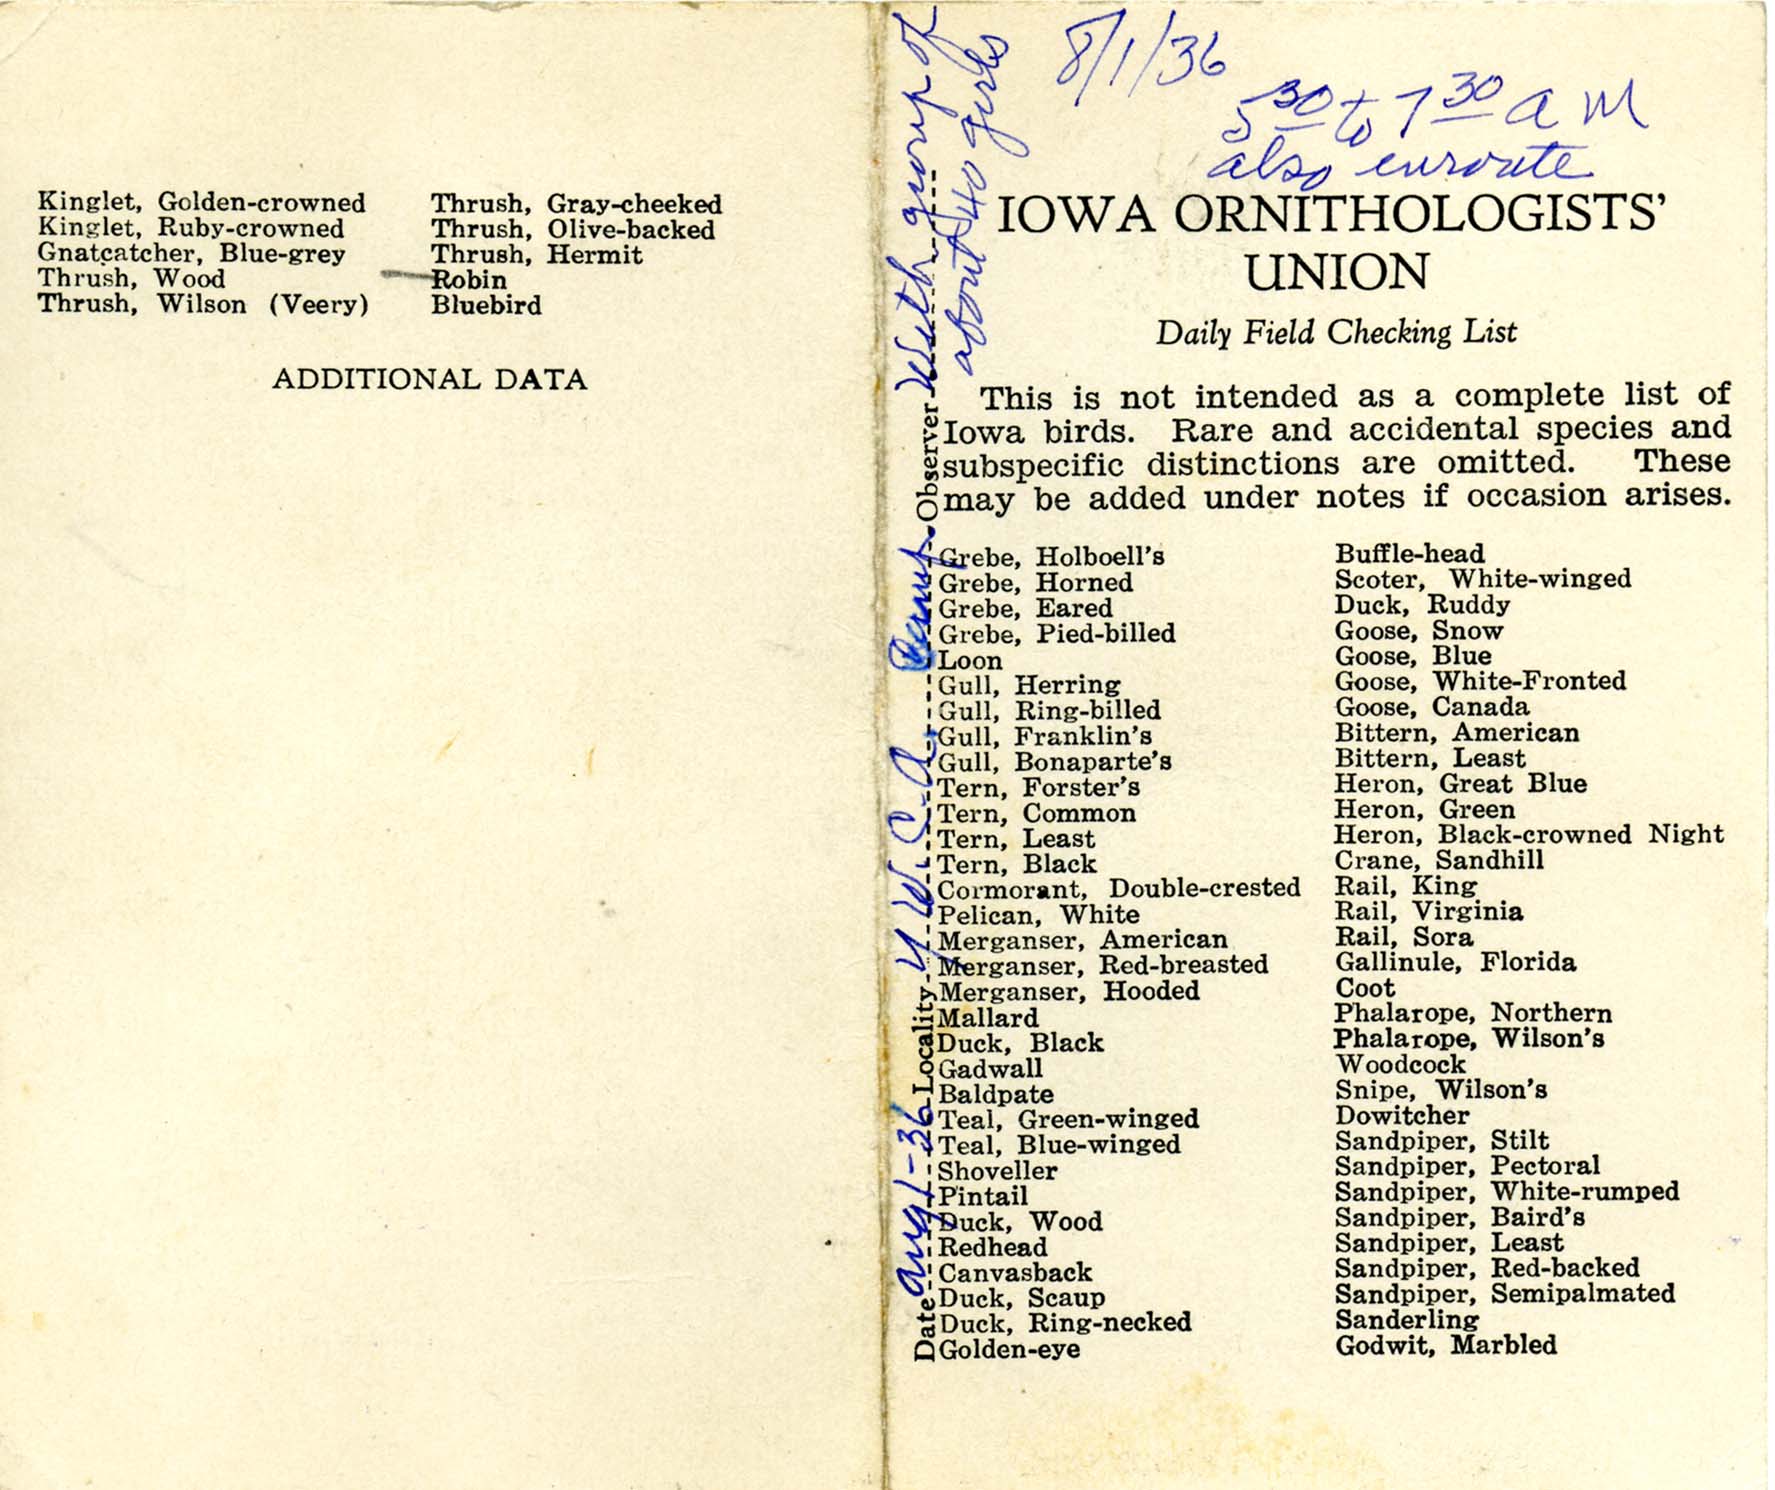 Daily field checking list, Walter Rosene, August 1, 1936